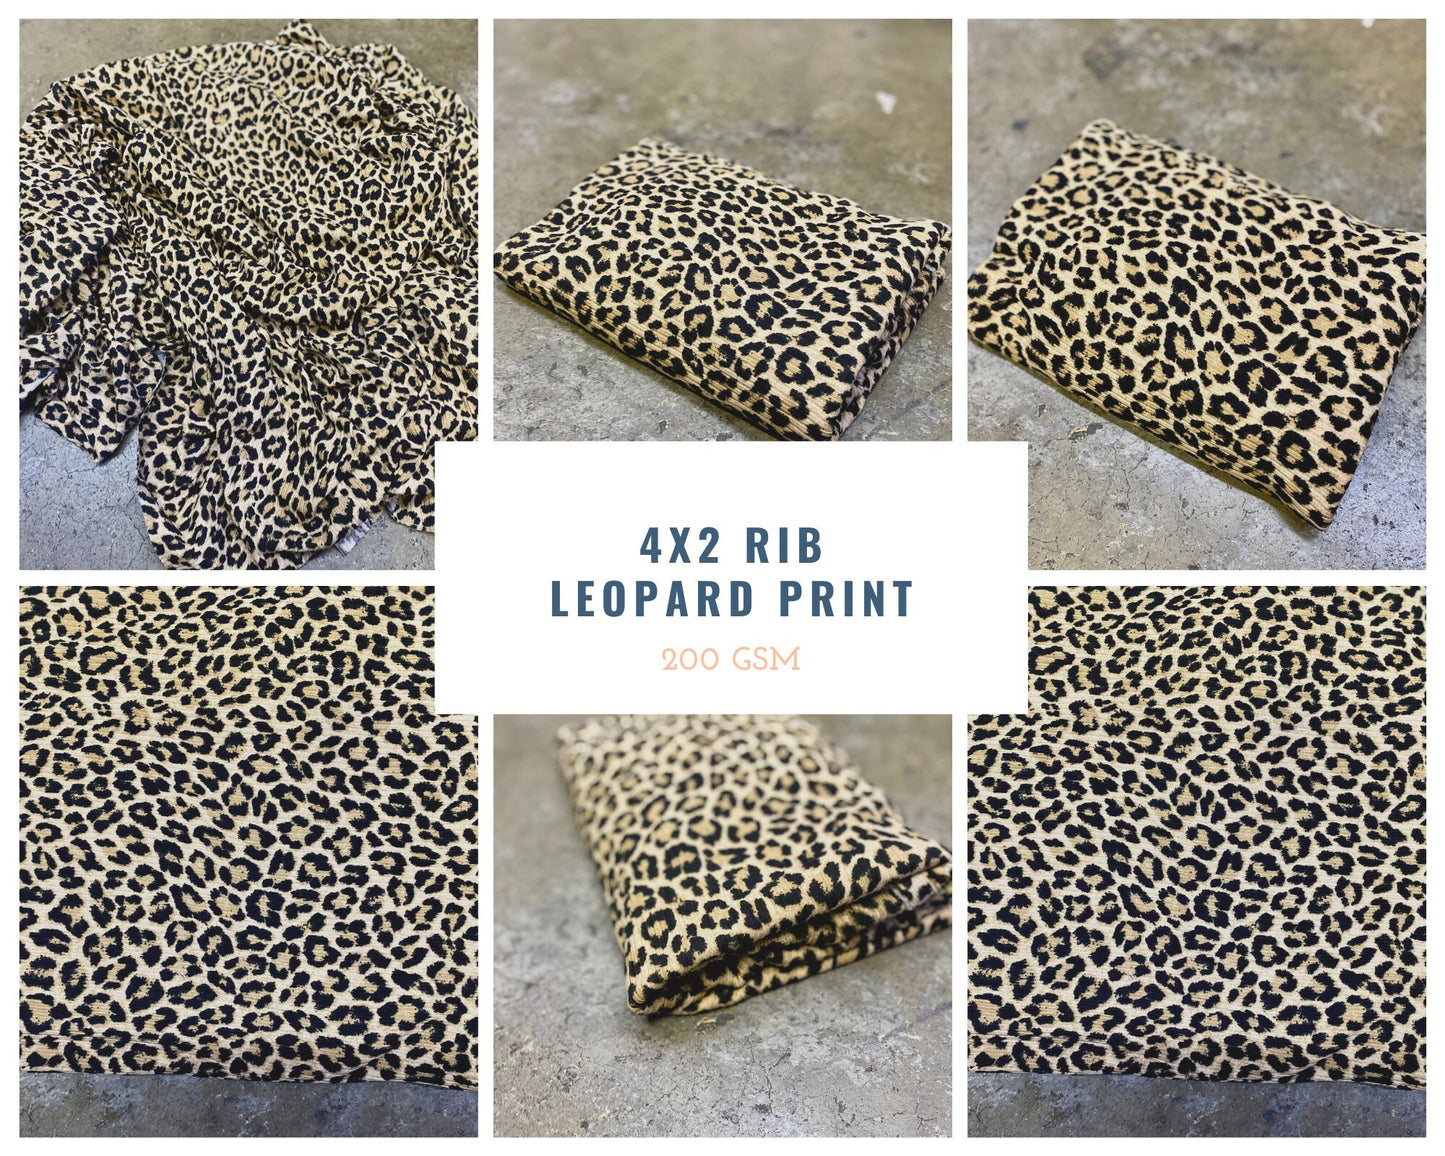 4x2 Rib Knit Spandex Leopard Print Fabric by the Yard 200GSM